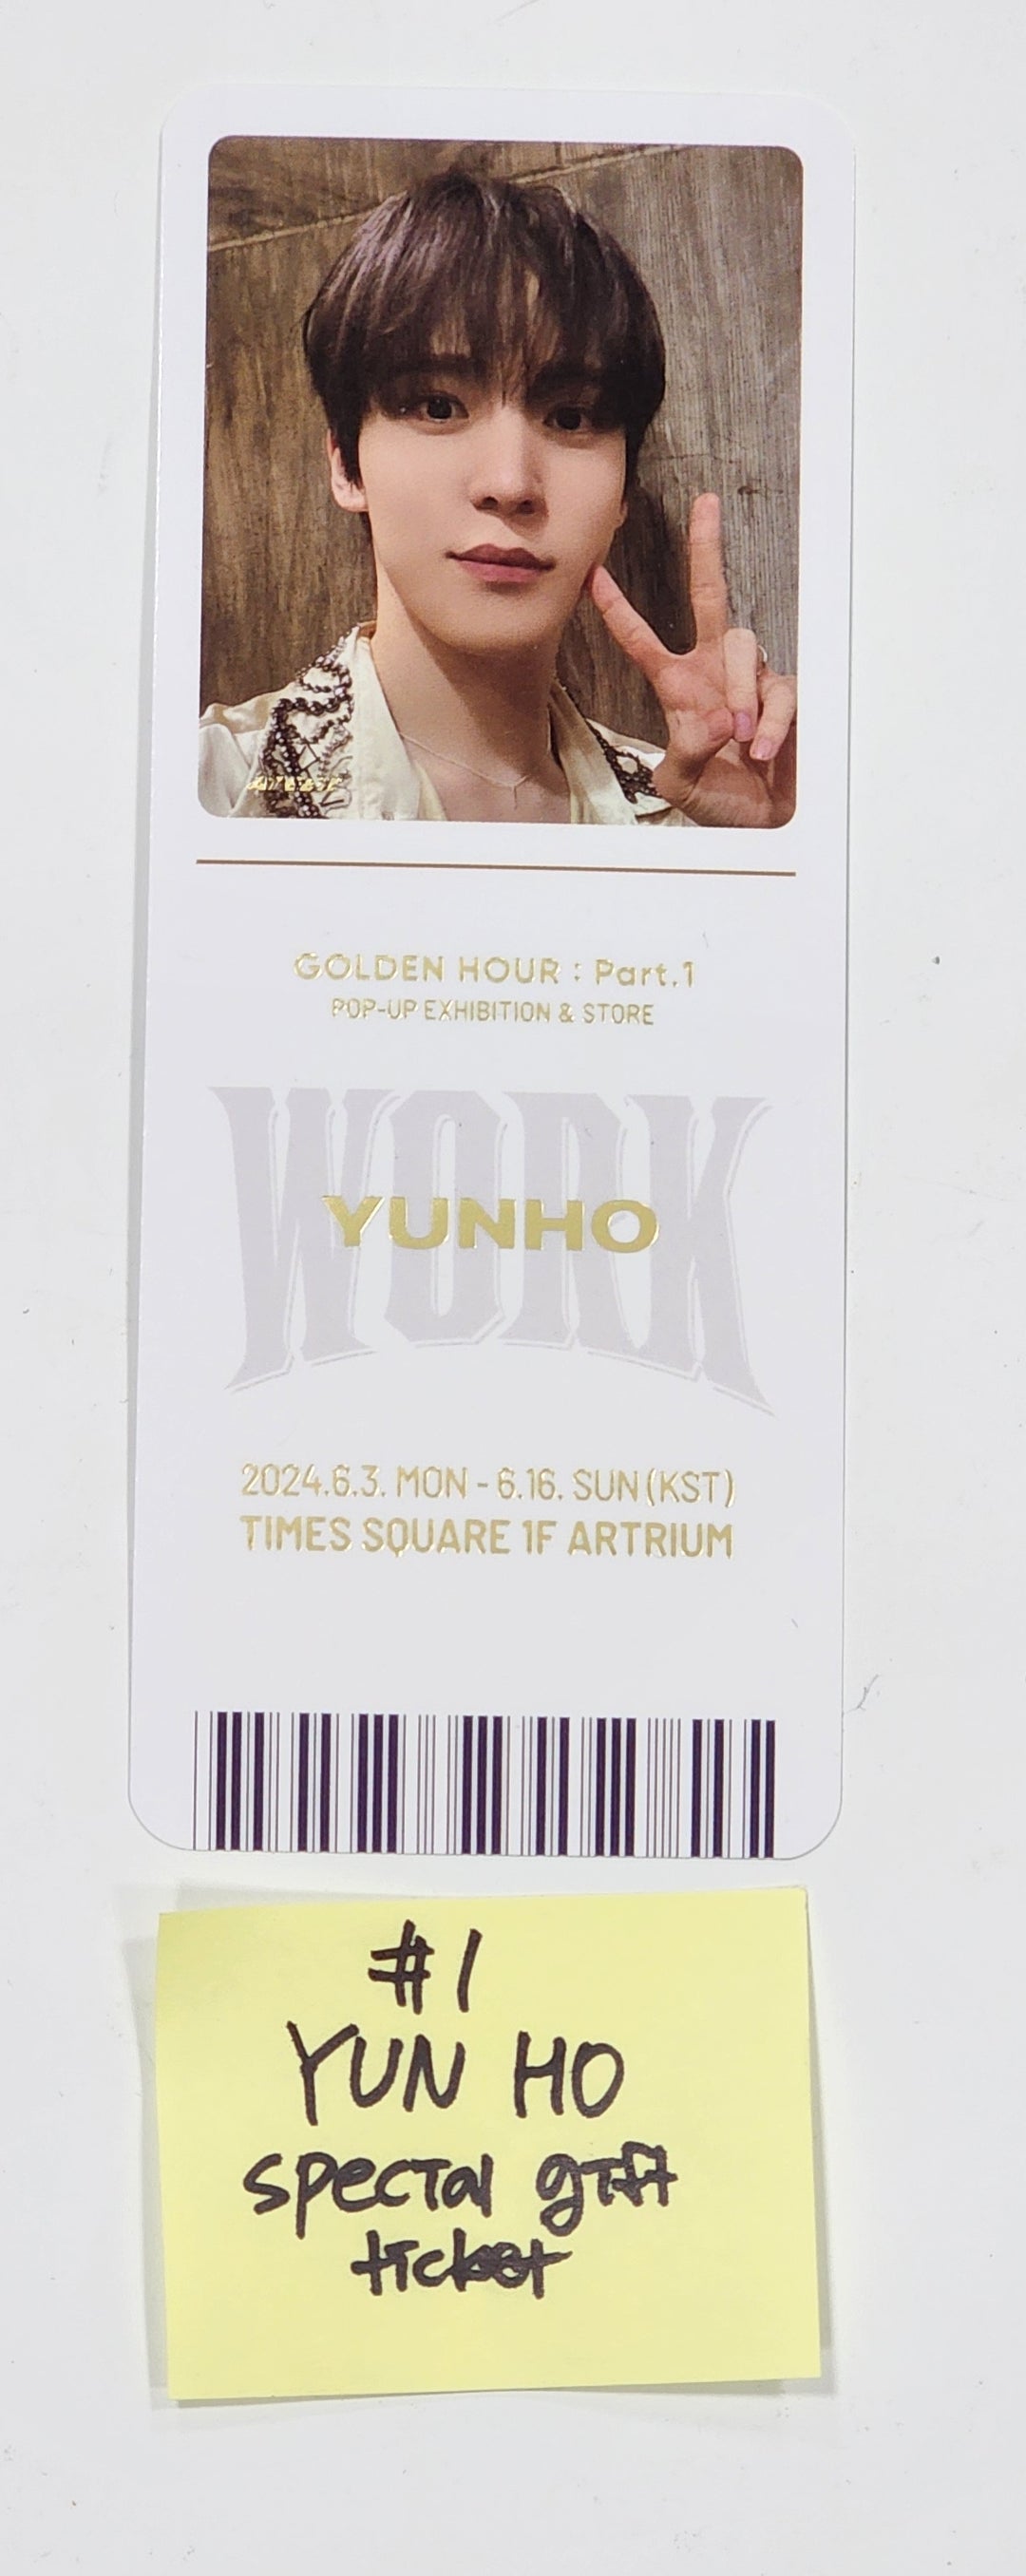 Ateez - [GOLDEN HOUR : Part.1] Pop-Up Exhibition & Store Event Special Ticket [24.06.03]